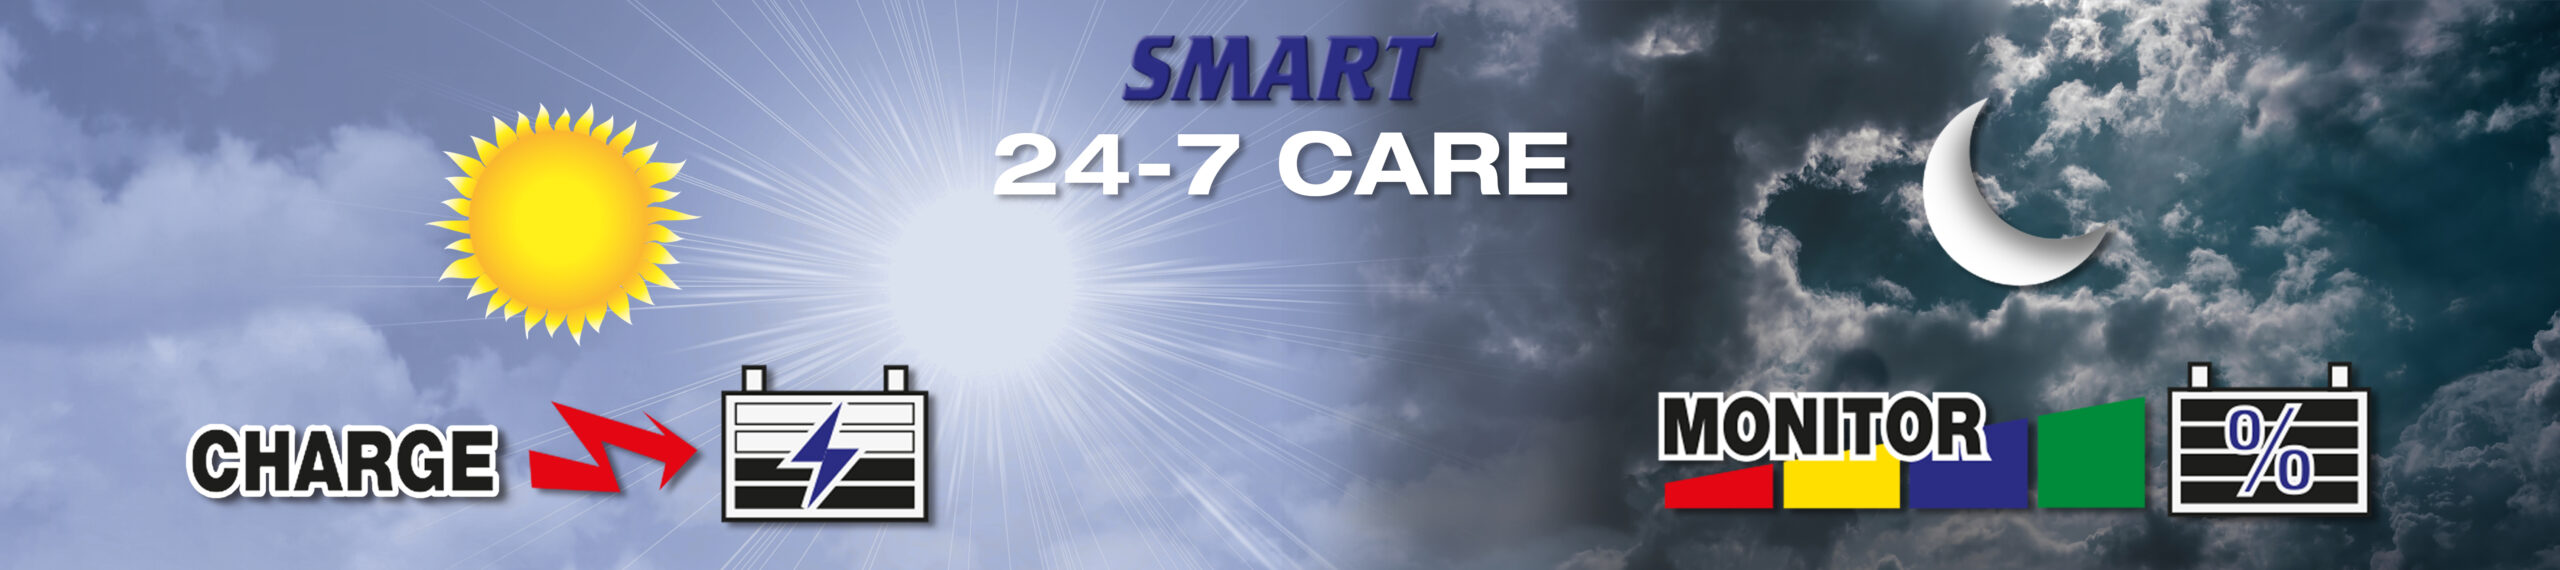 smart 24-7 care